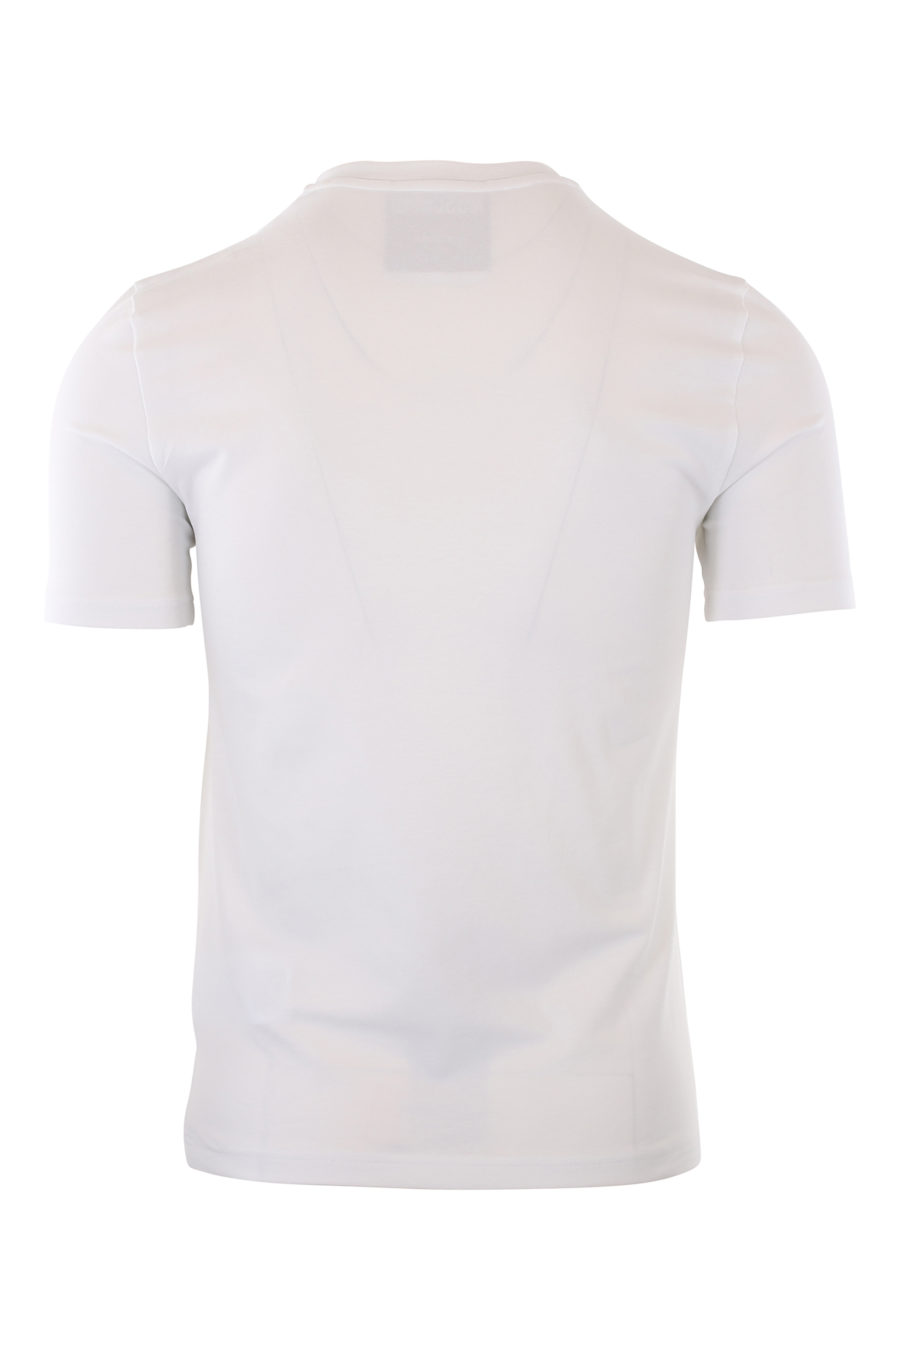 Camiseta blanca con logo milano "smiley" - IMG 2428